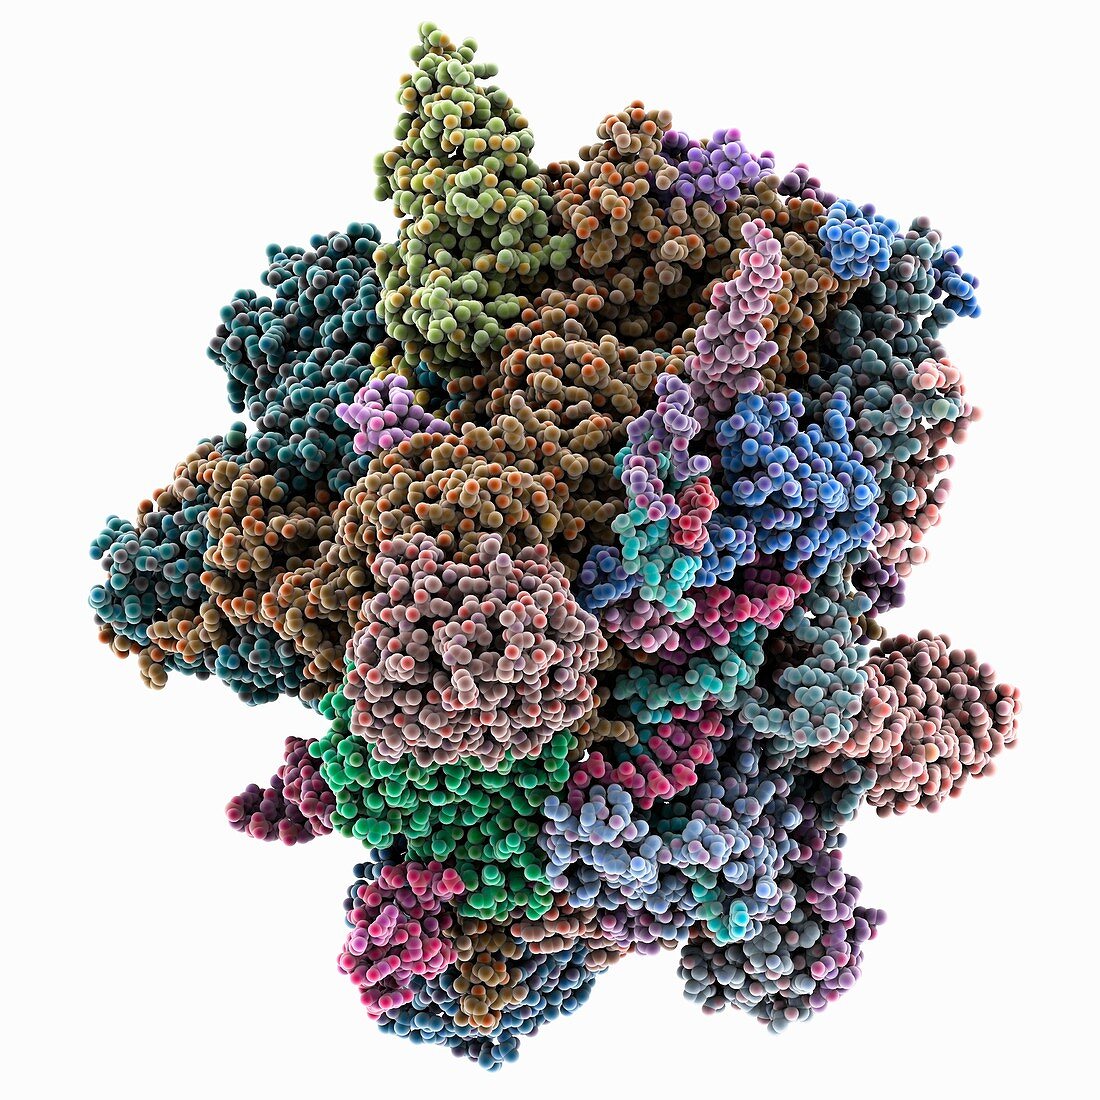 Human C complex spliceosome, molecular model